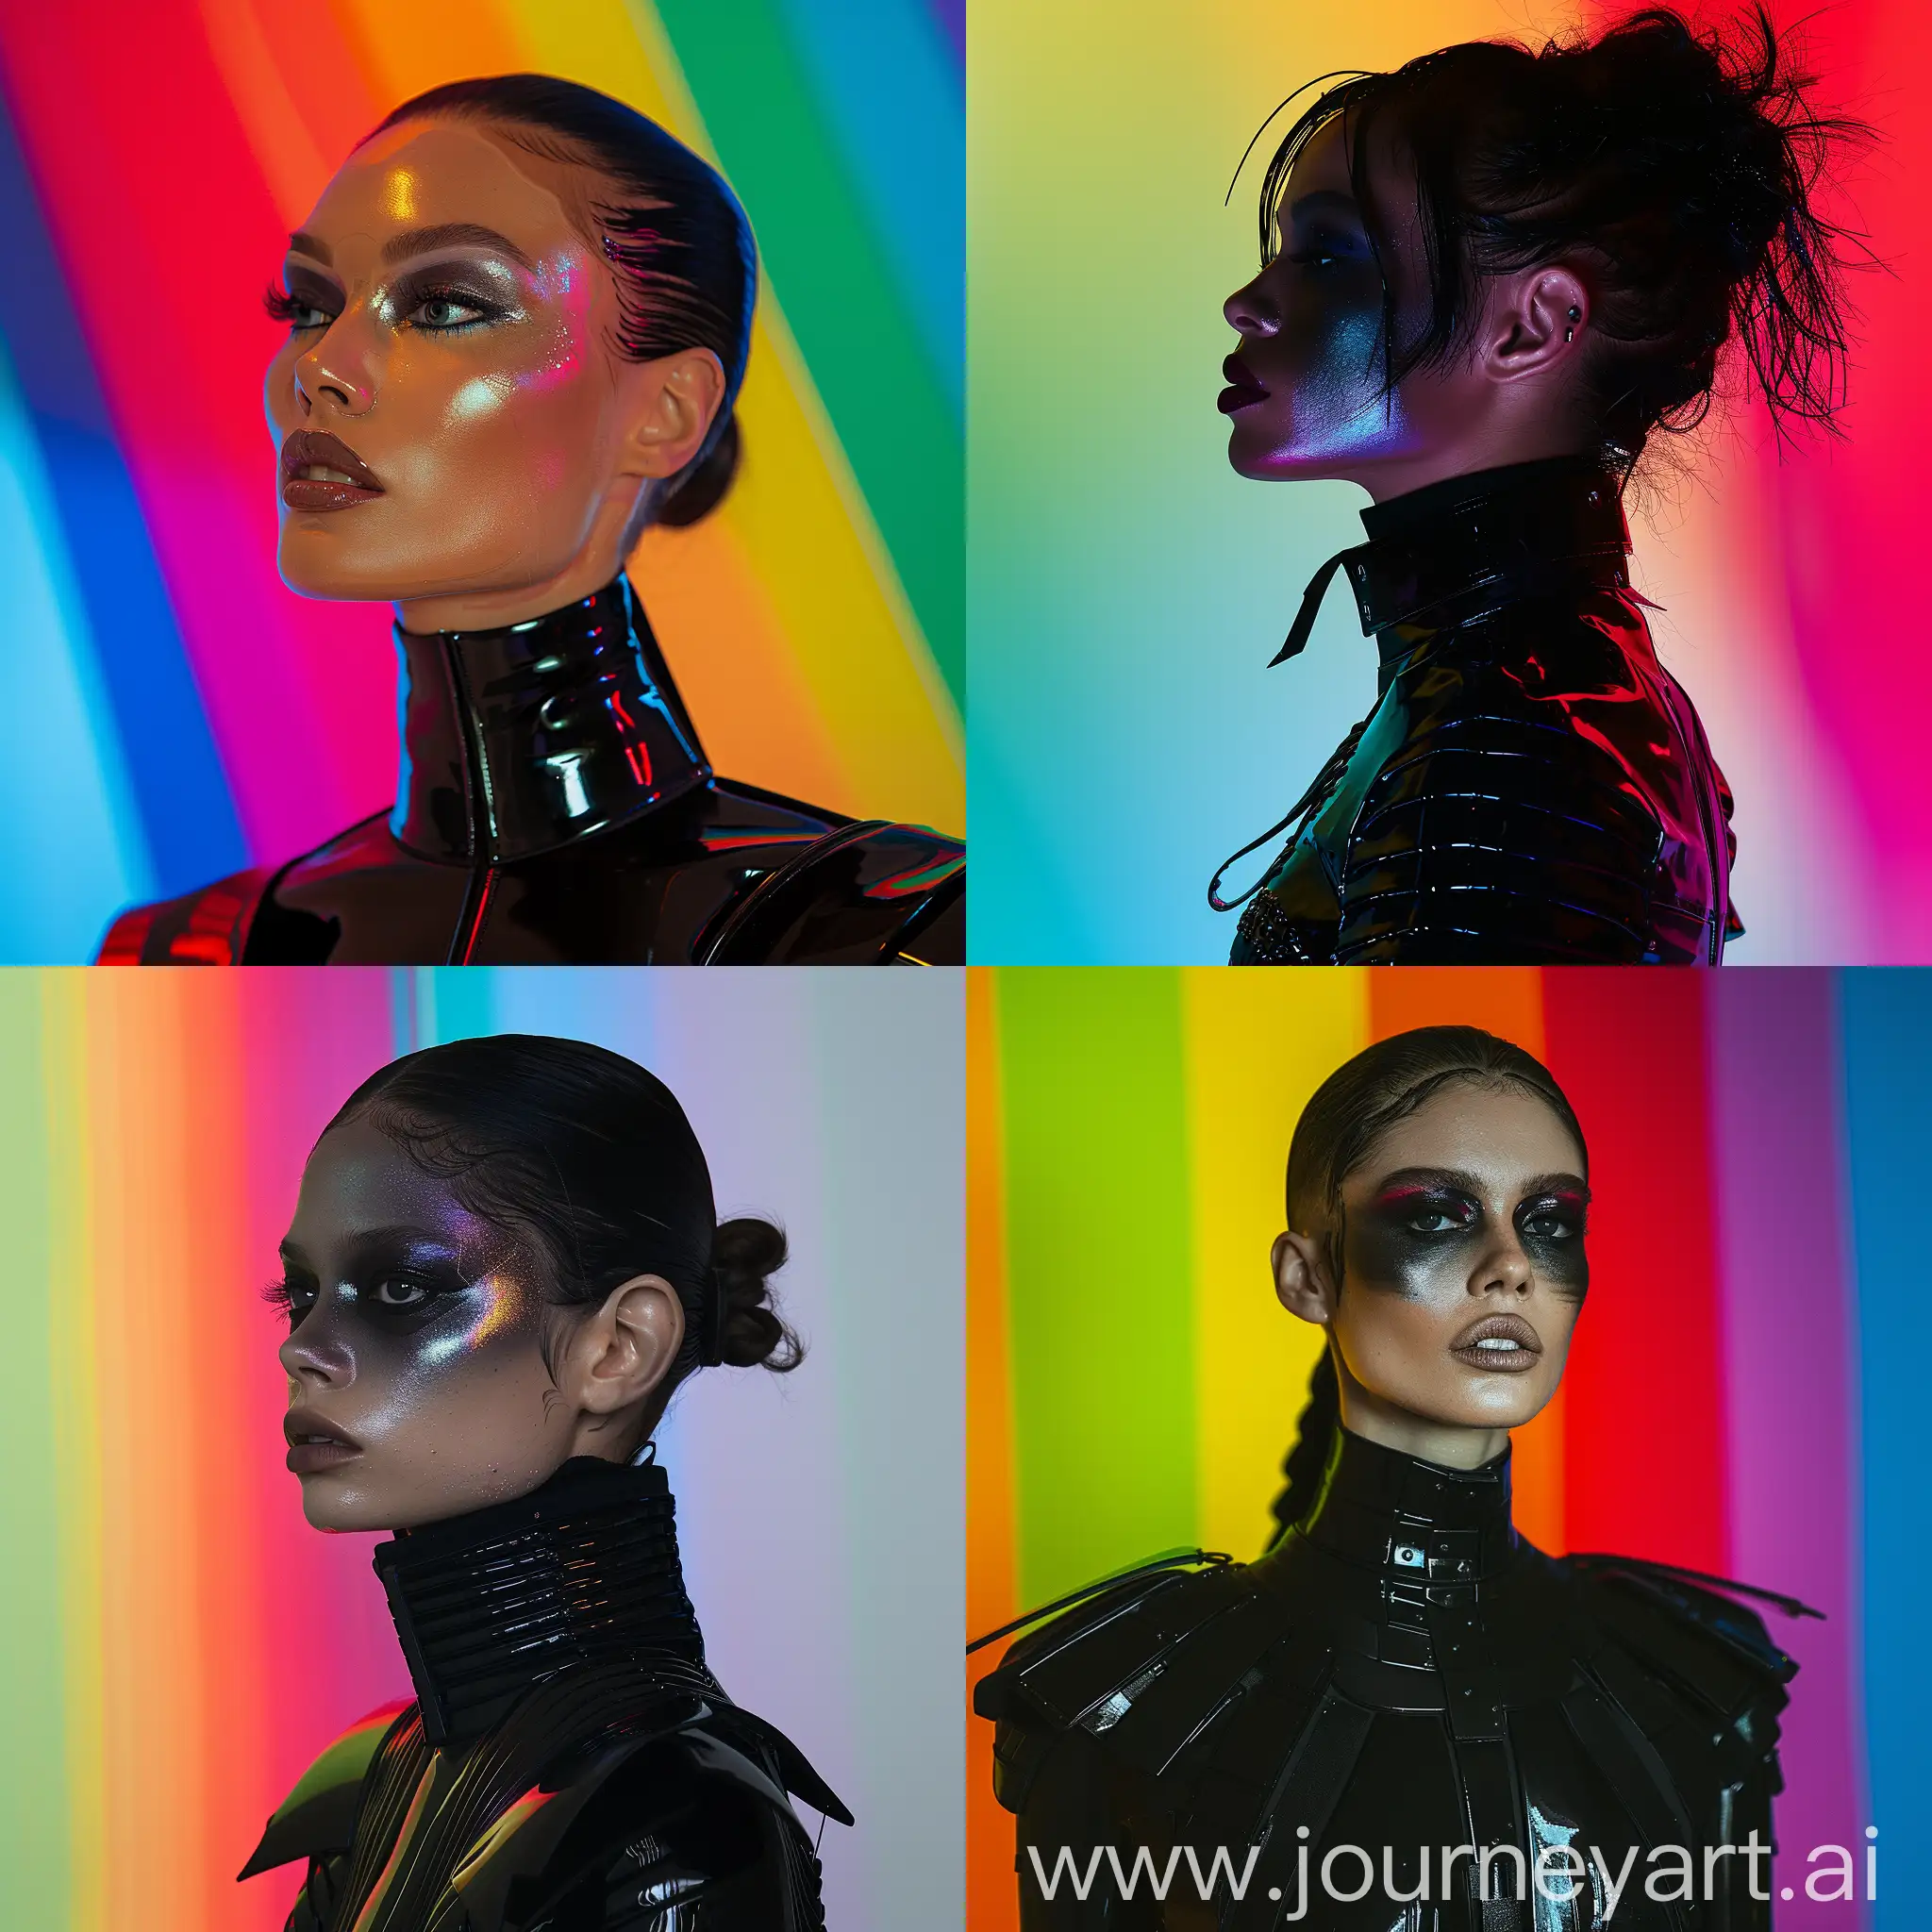 Futuristic-Fashion-Maven-in-Black-Lacquered-Layers-against-Vibrant-Rainbow-Background